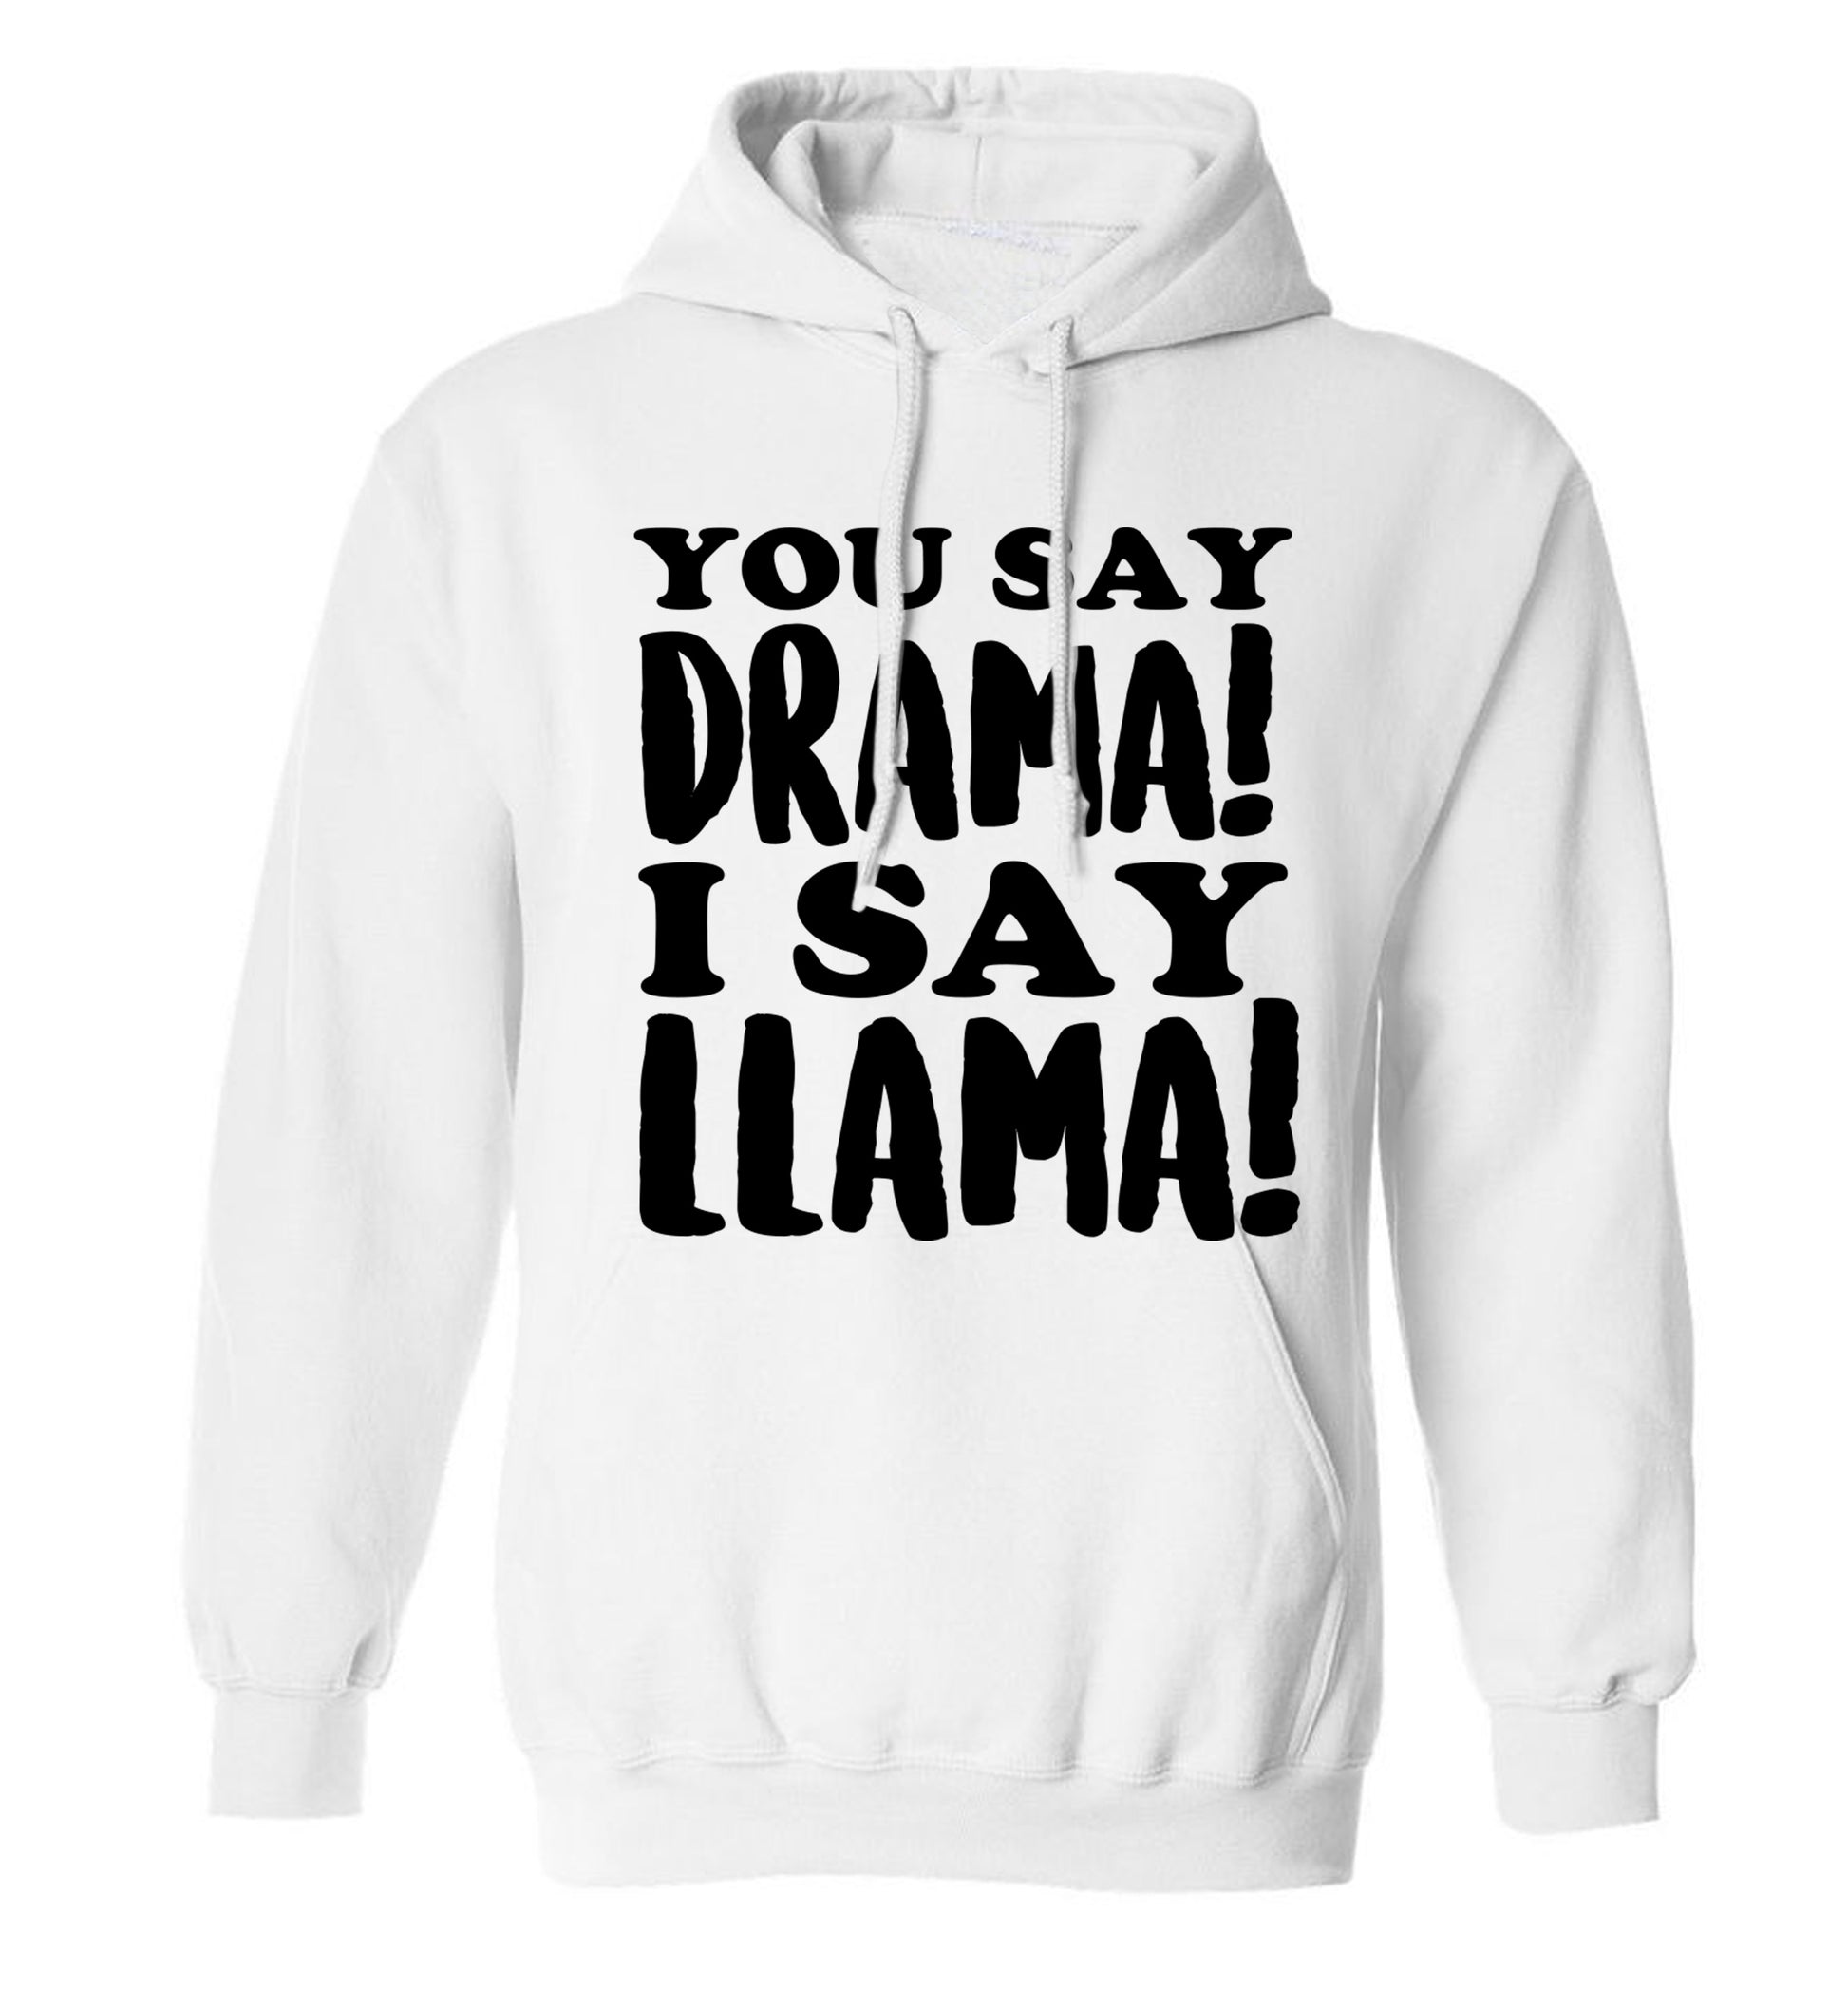 You say drama I say llama! adults unisex white hoodie 2XL